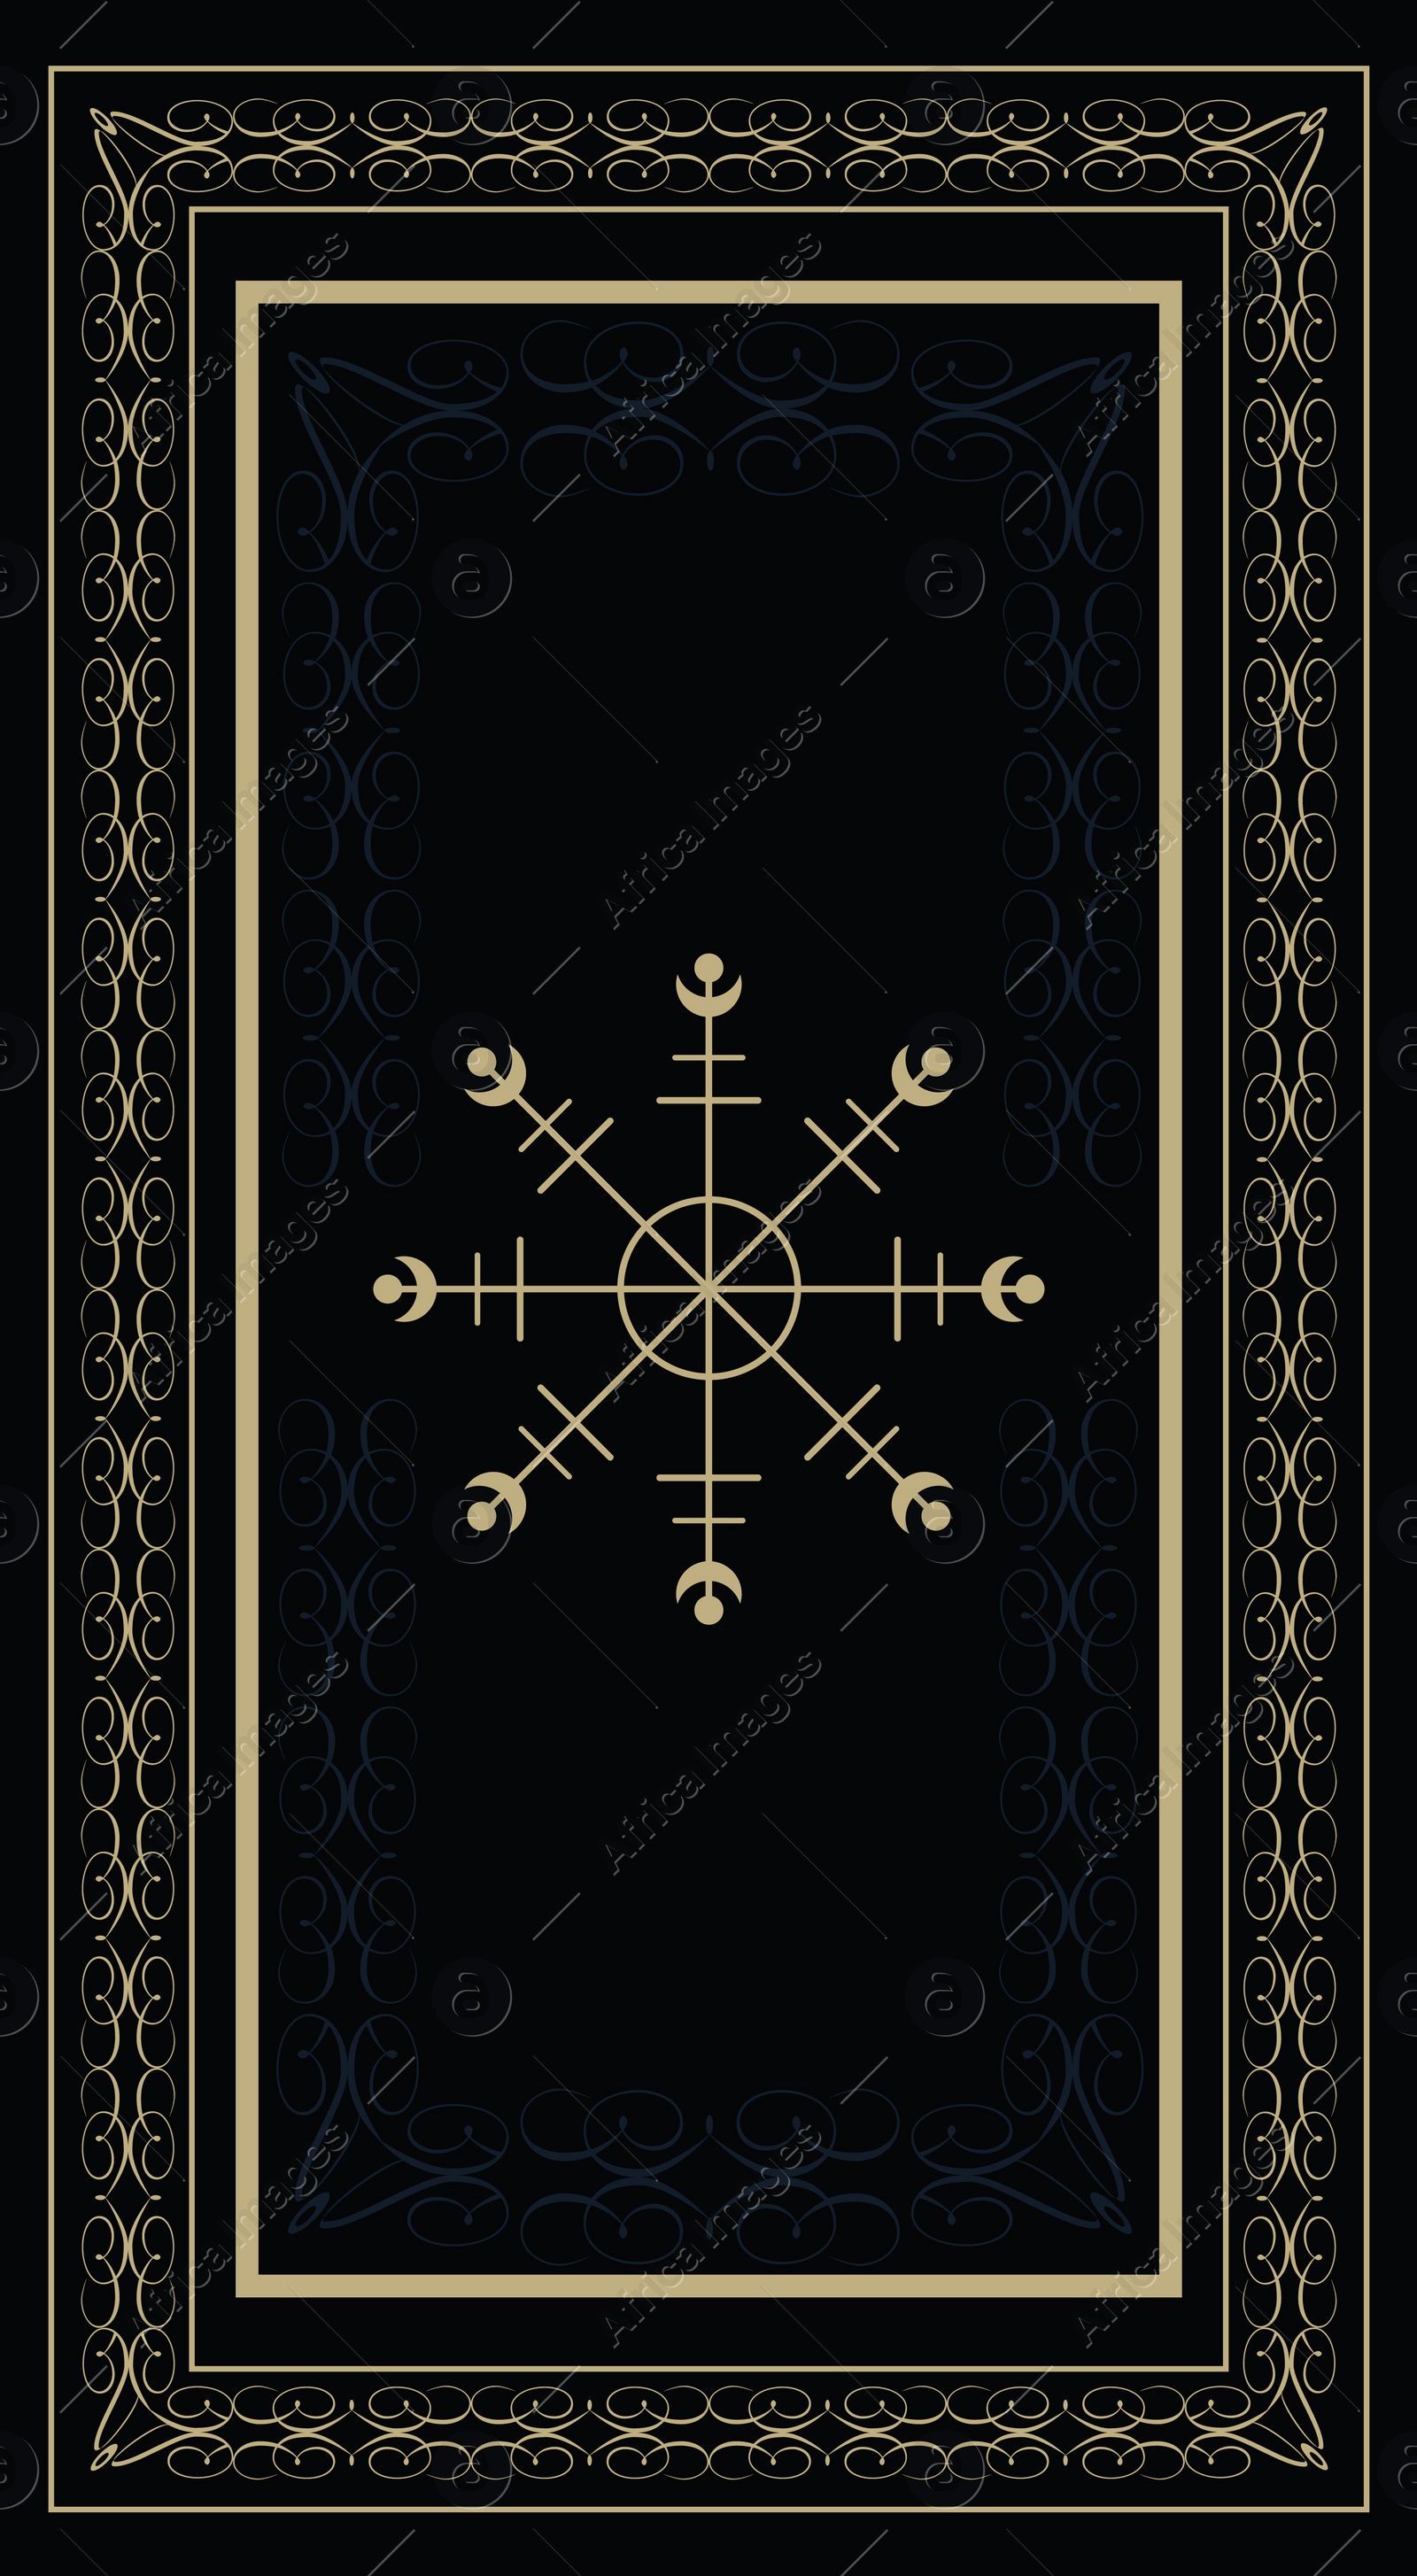 Illustration of Tarot card design, reverse side. Fortune telling